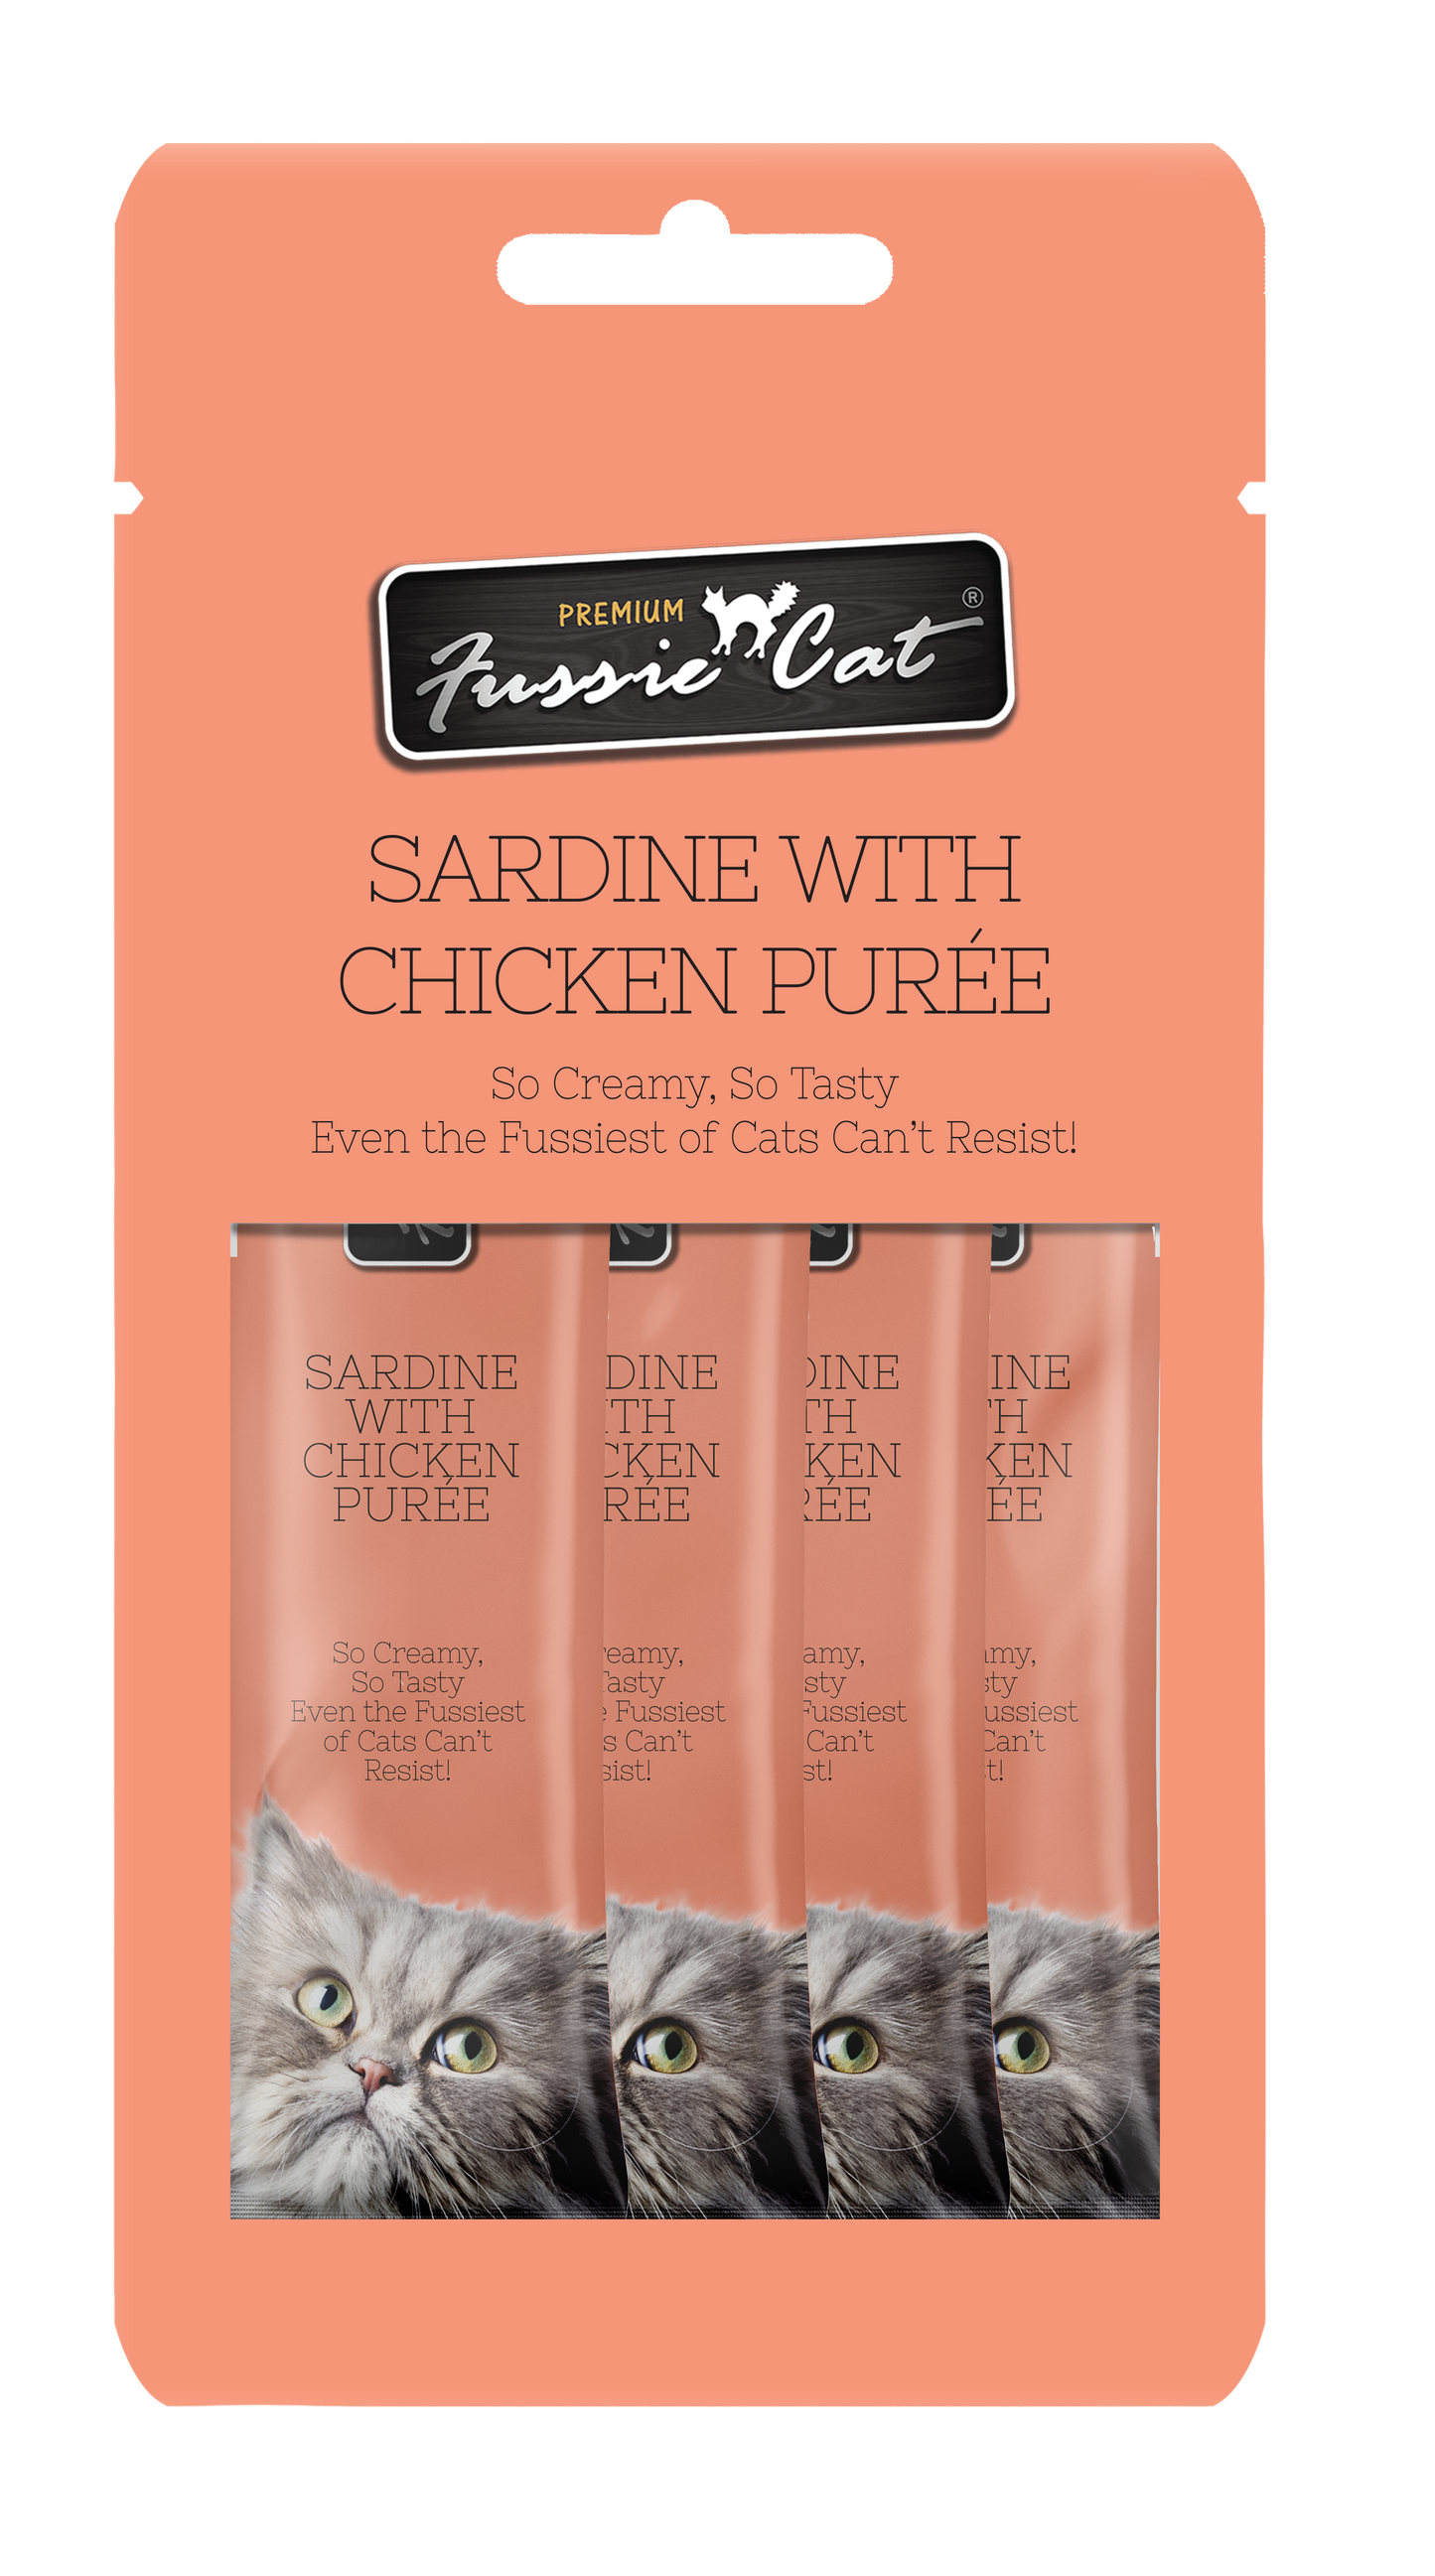 Fussie Cat Sardine With Chicken Purée 0.5-oz, 4-Pack, Cat Treat